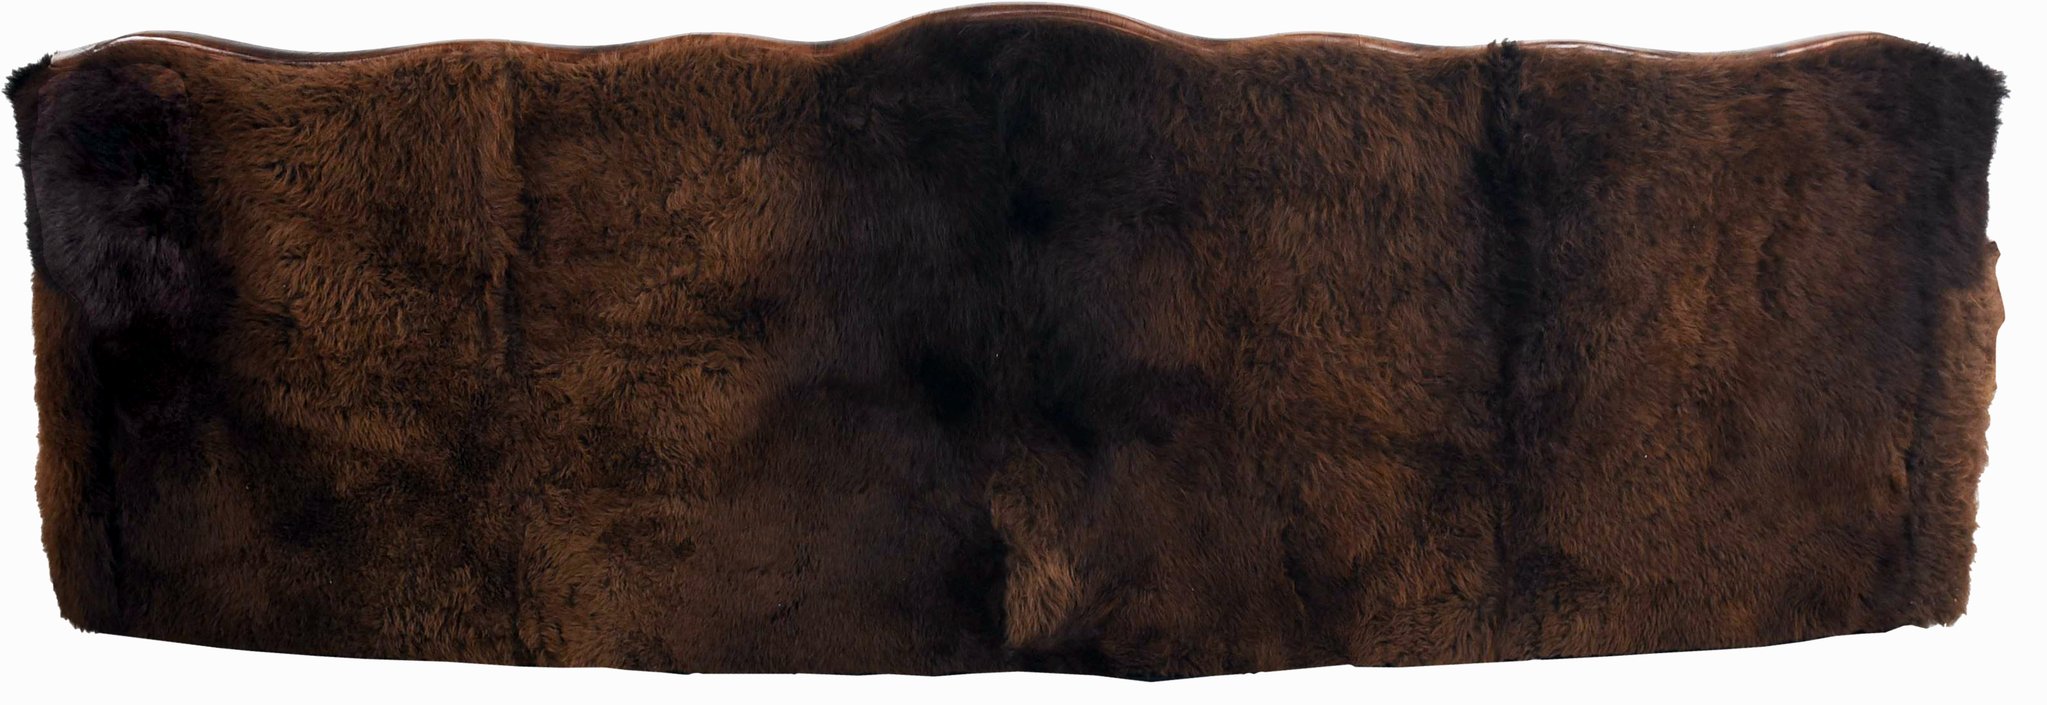 Yellowstone Buffalo Curved Sofa